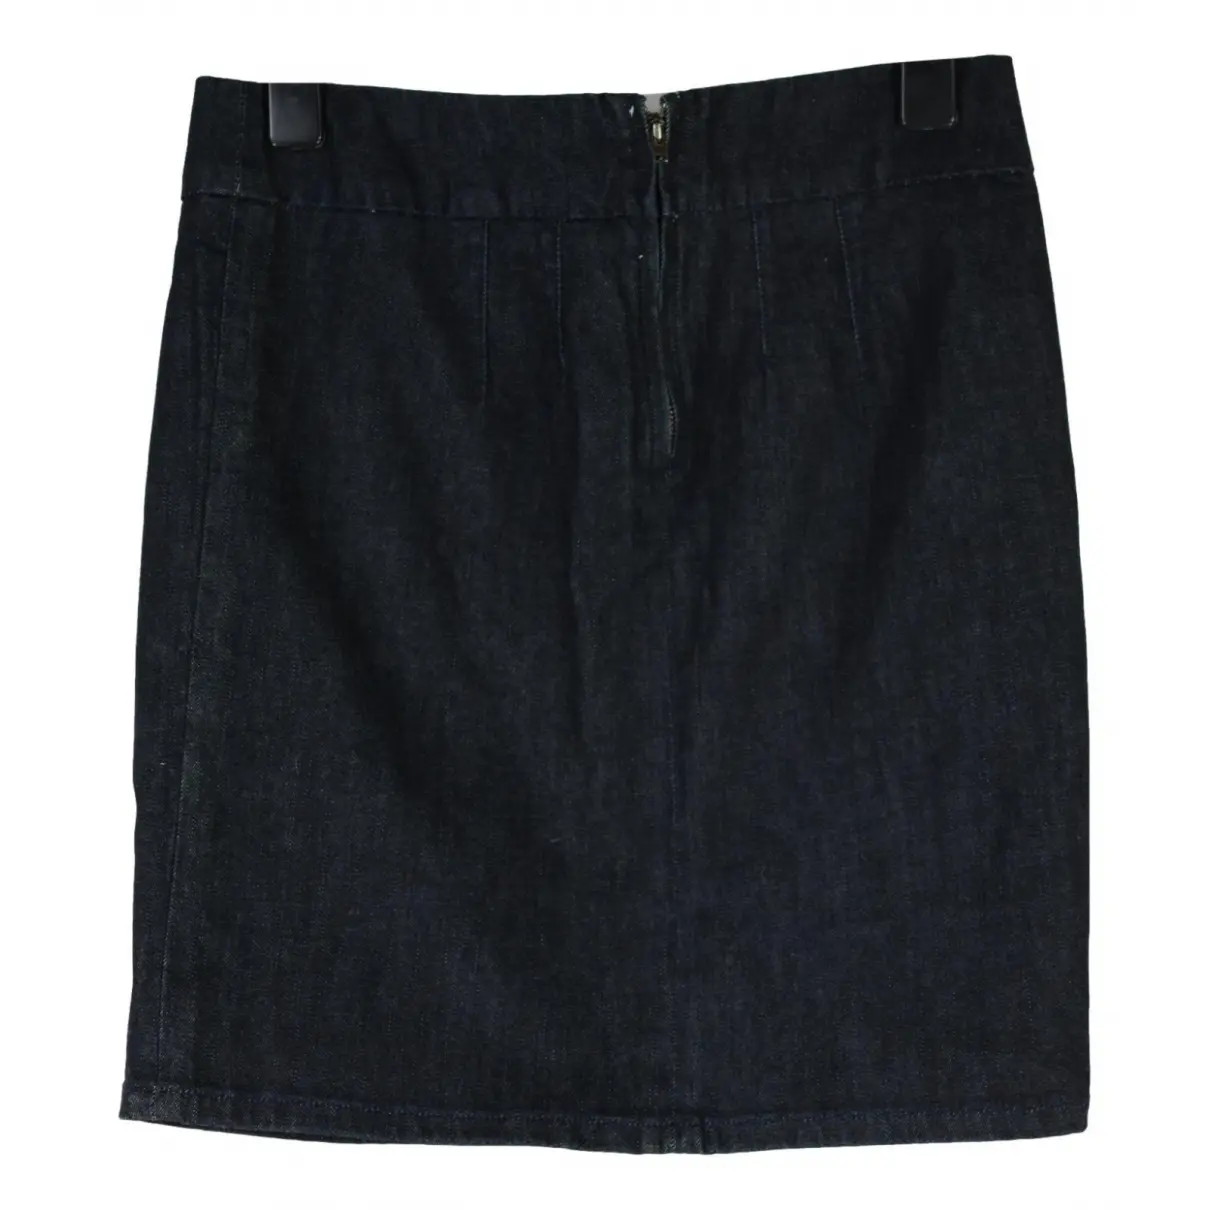 Buy Tommy Hilfiger Mini skirt online